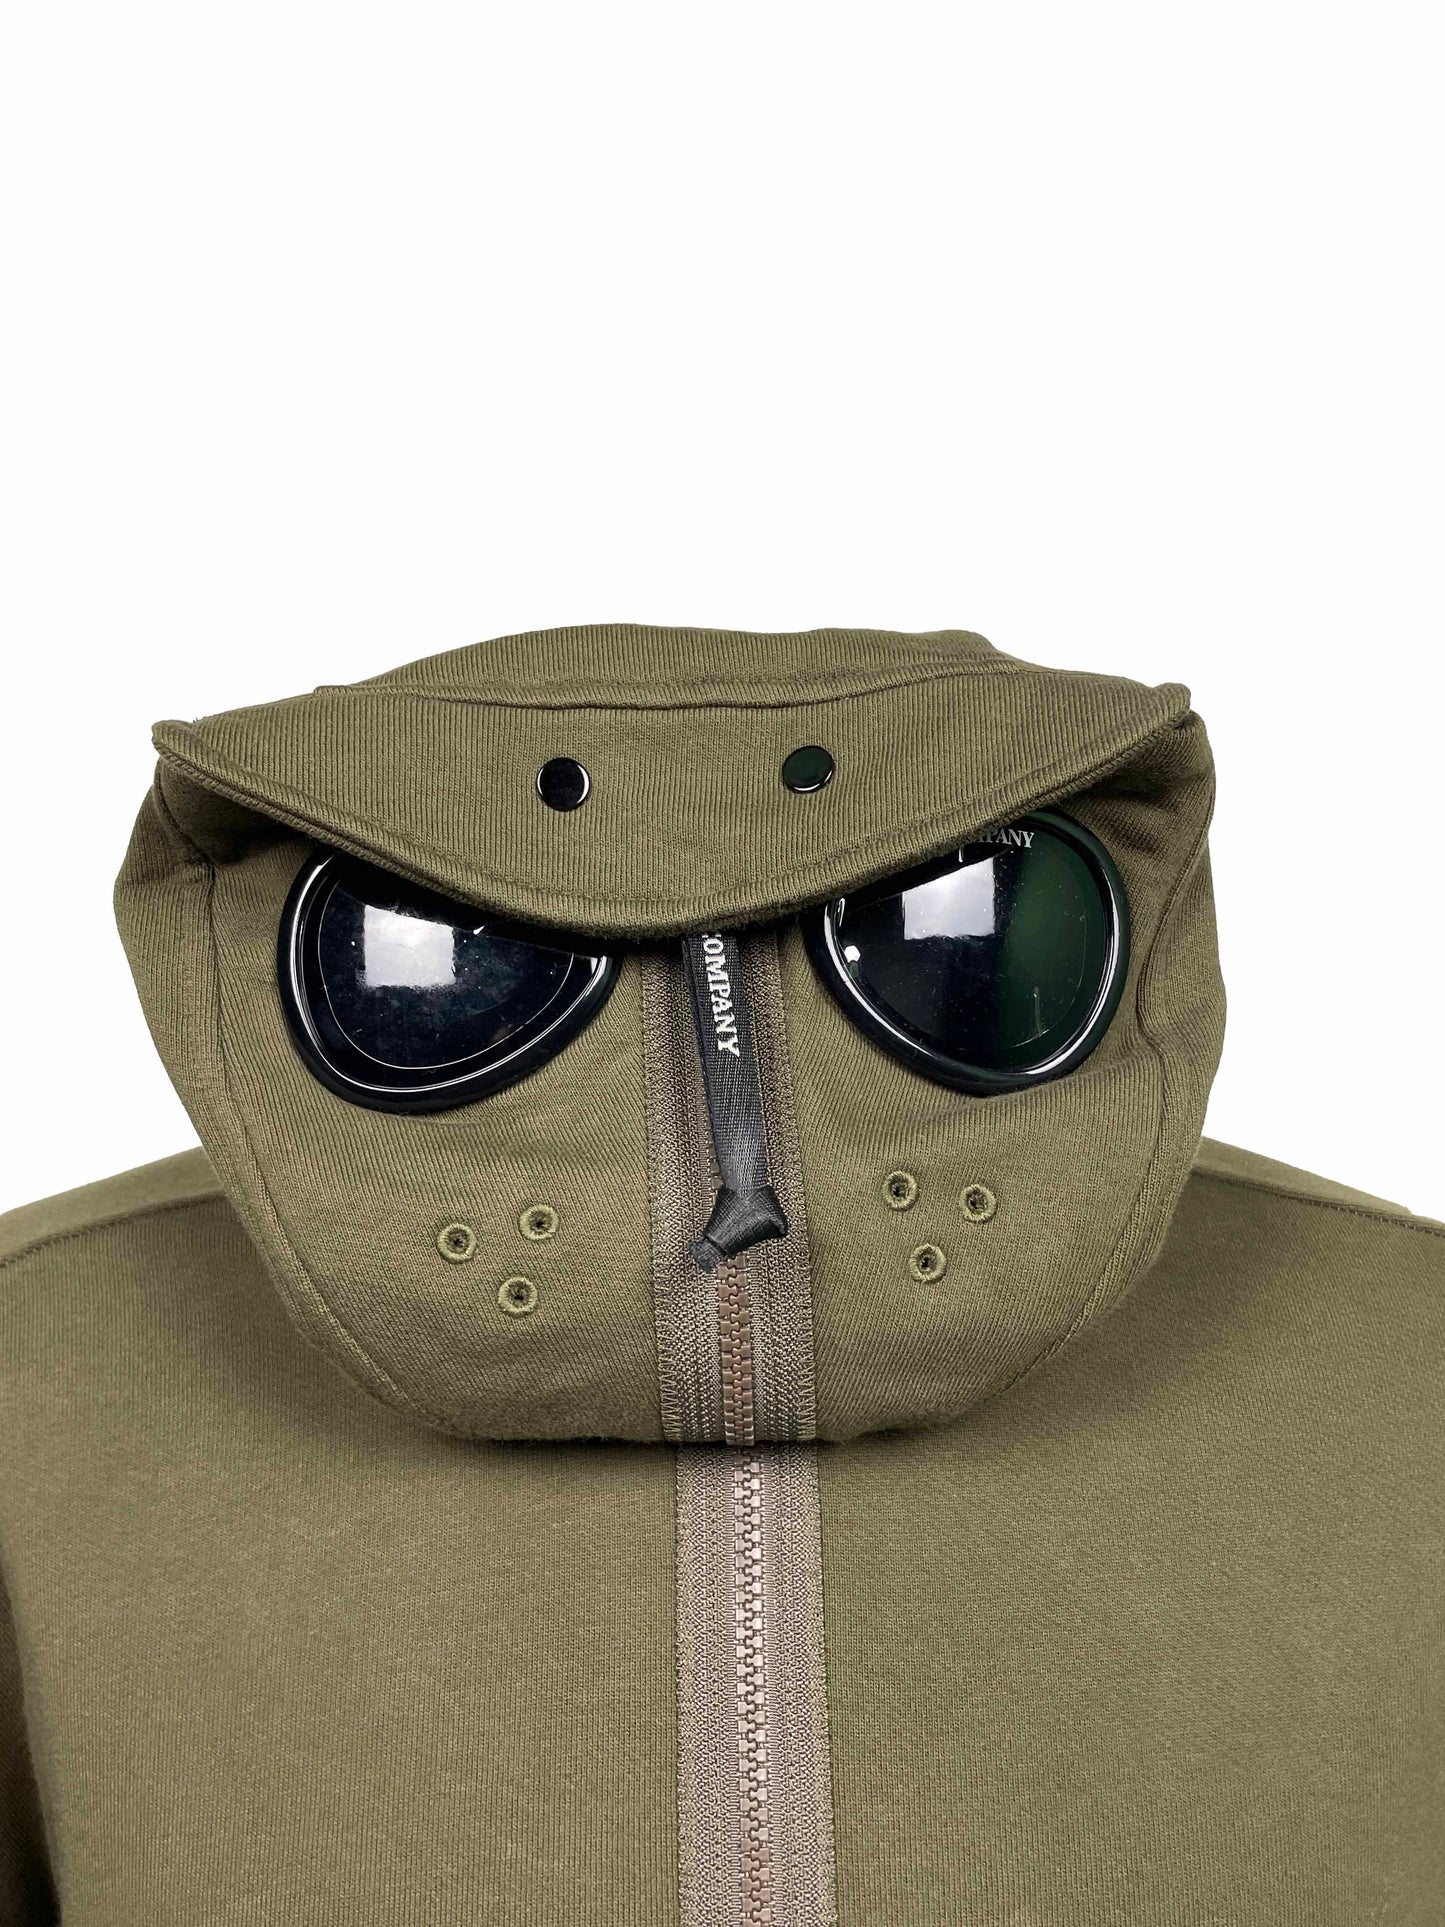 C.P. Company - Hood F.Zip Occhiale - Verde Militare